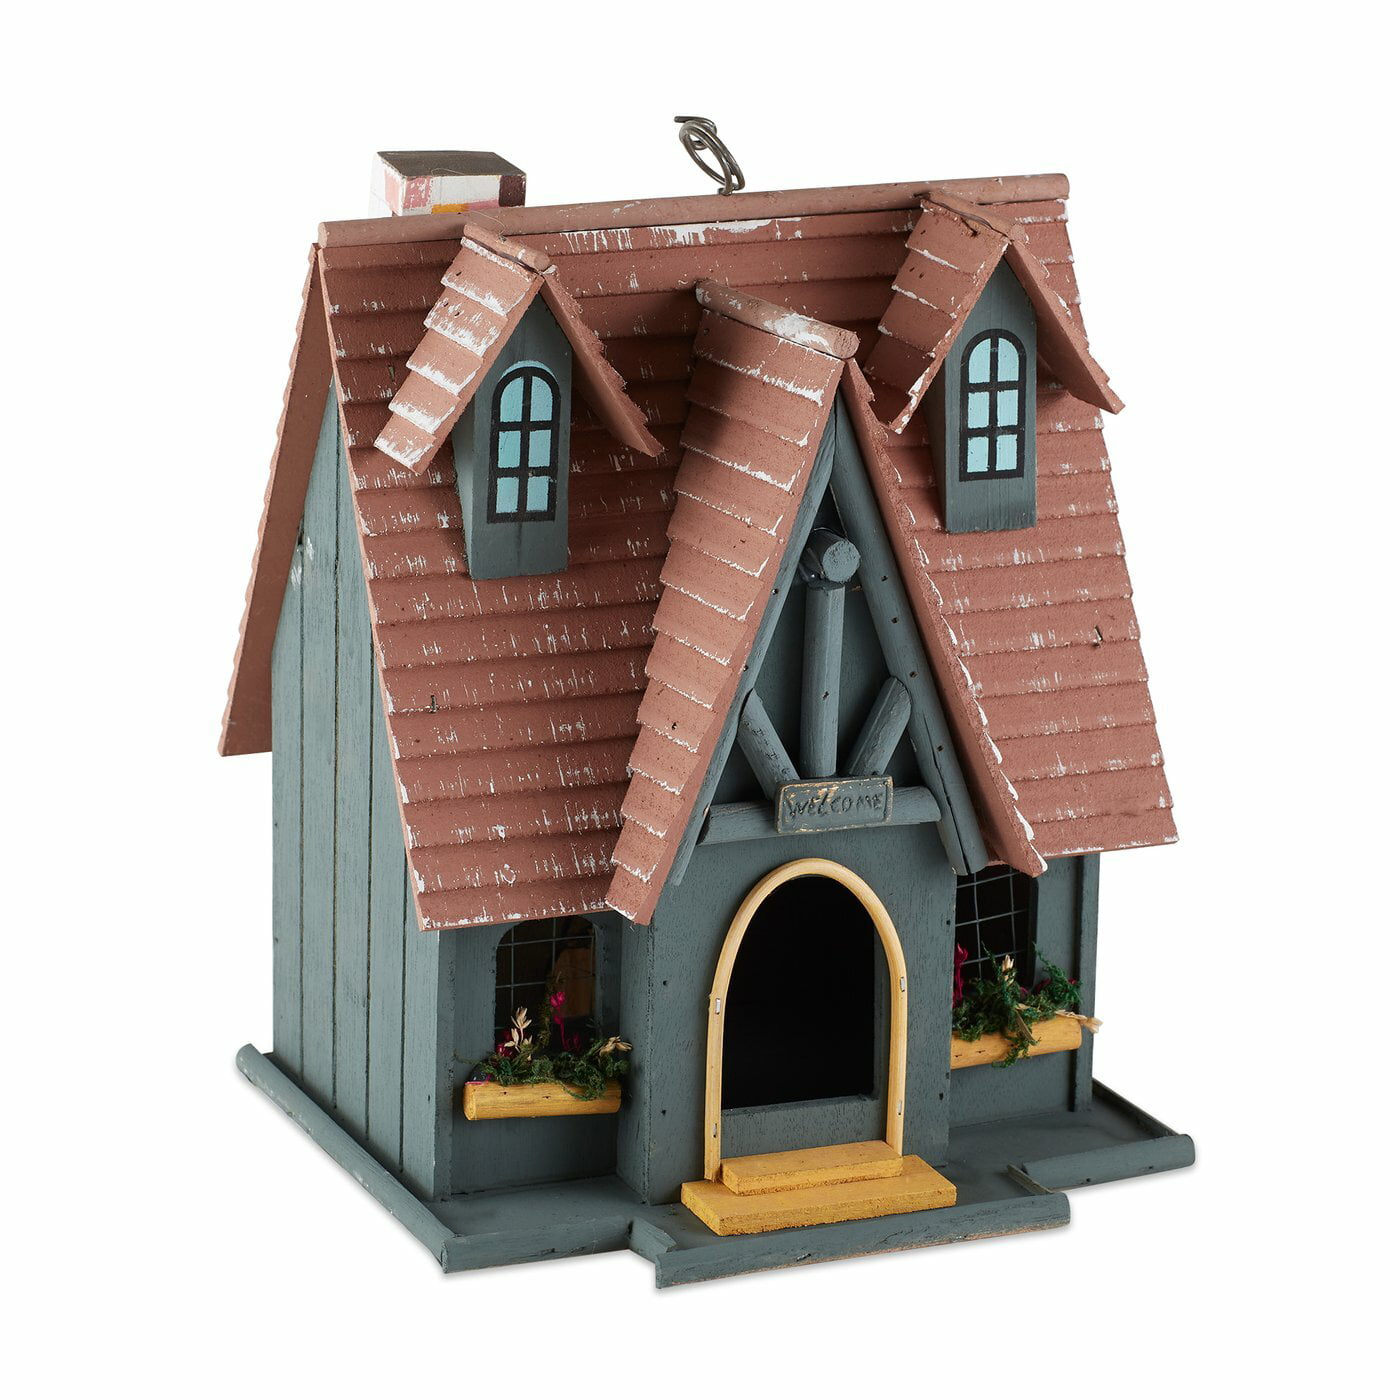 Dawhud Direct Acorn Cottage Decorative Hand-Painted Bird House